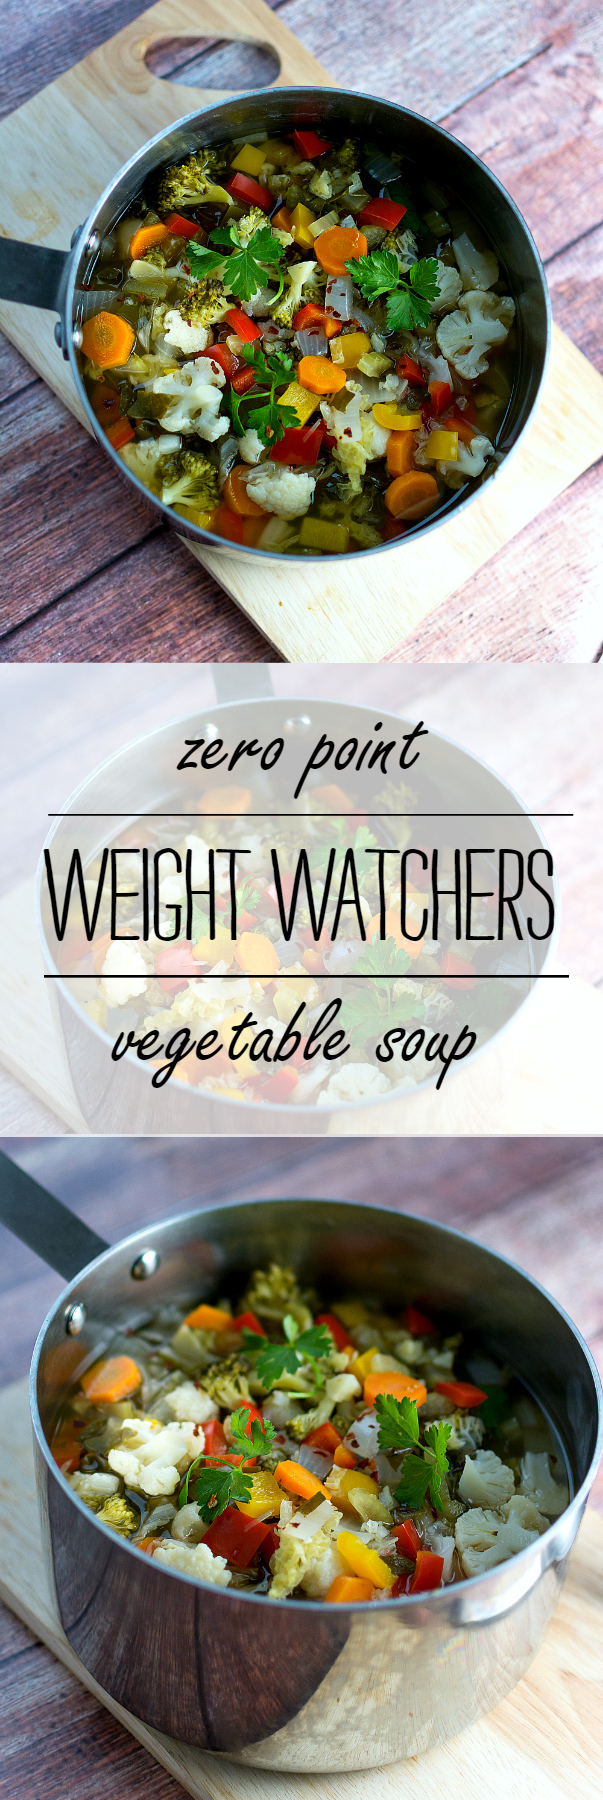 Vegetable Soup Recipe Idea: Zero Point Weight Watchers